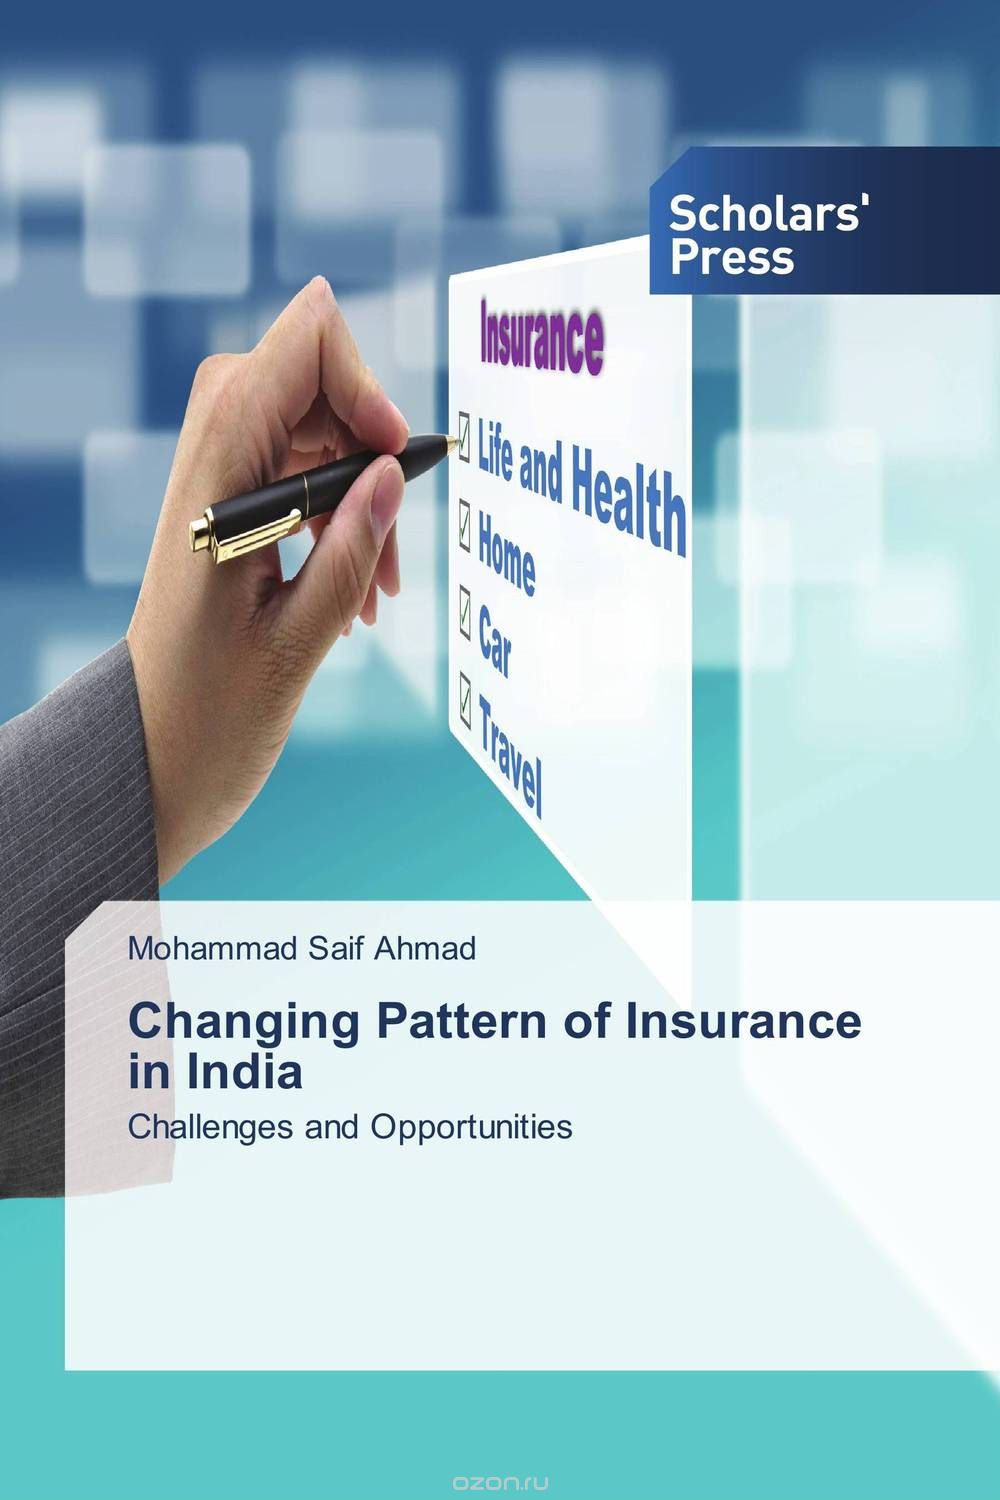 Скачать книгу "Changing Pattern of Insurance in India"